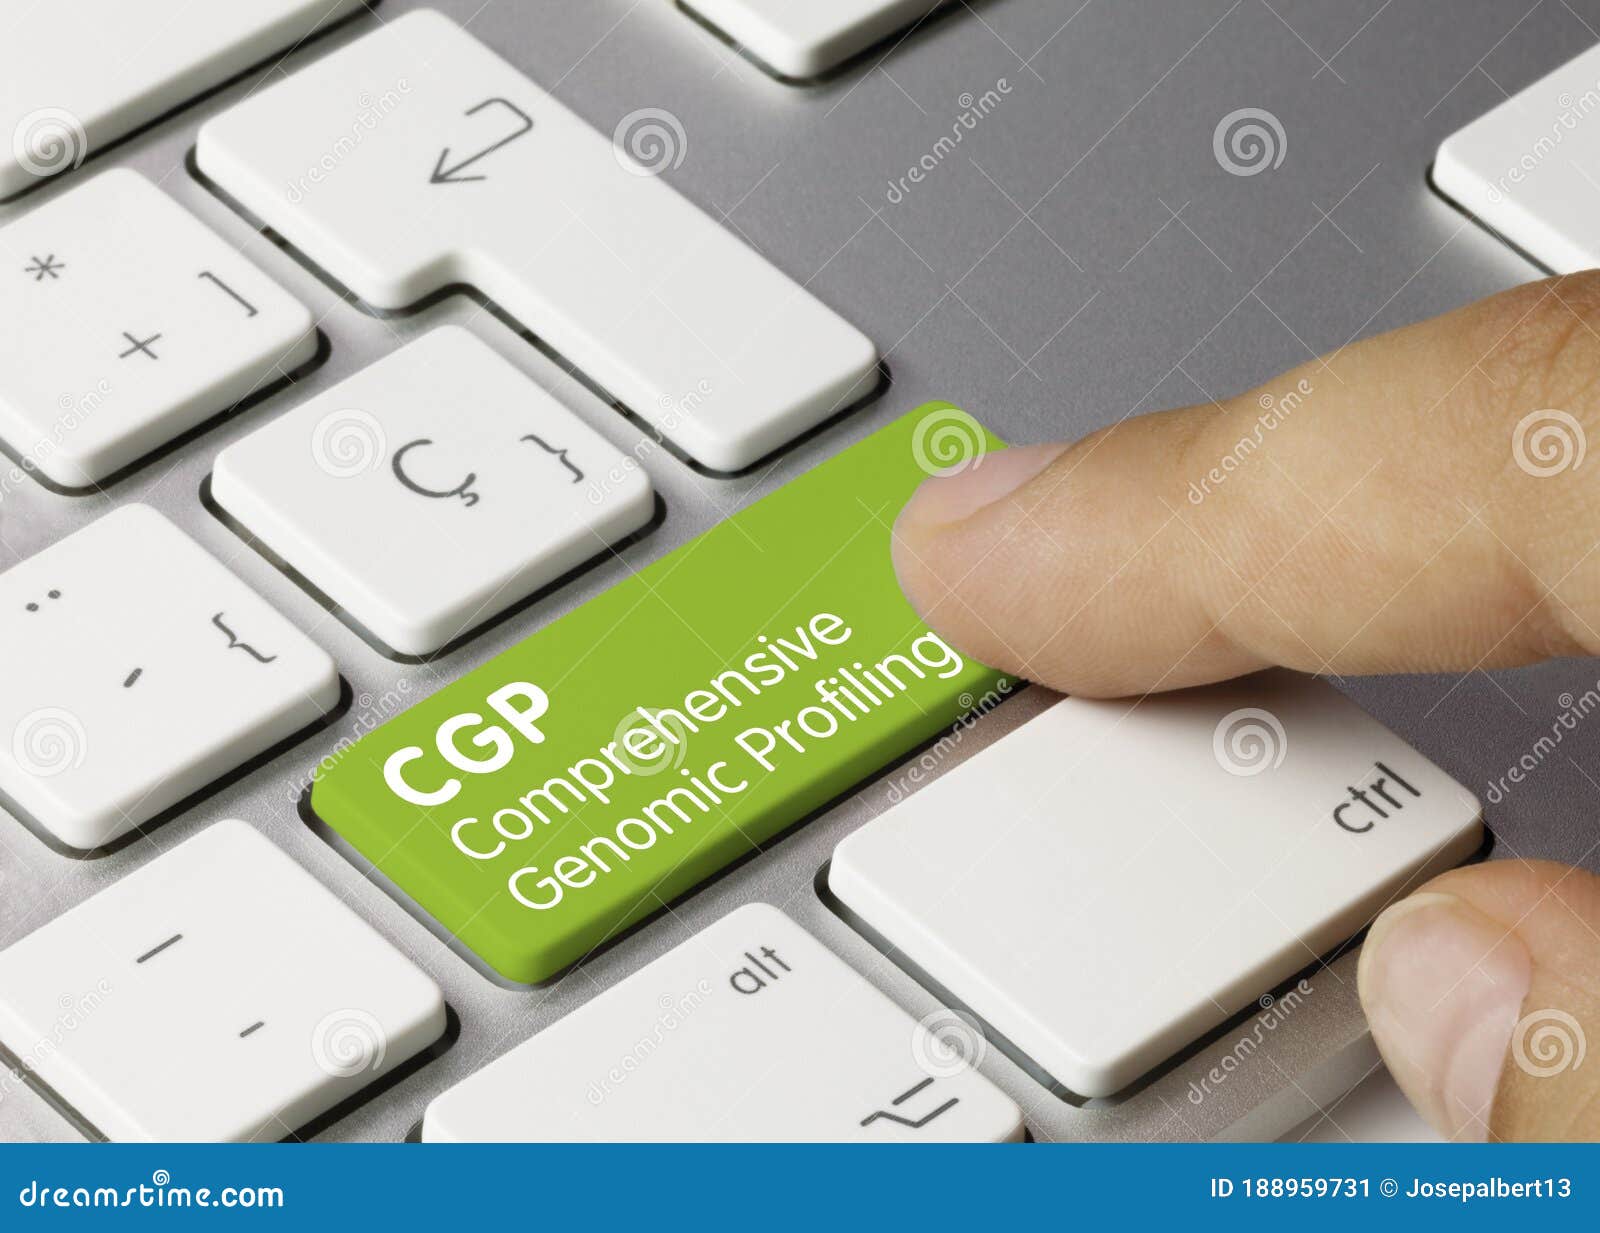 cgp comprehensive genomic profiling - inscription on green keyboard key